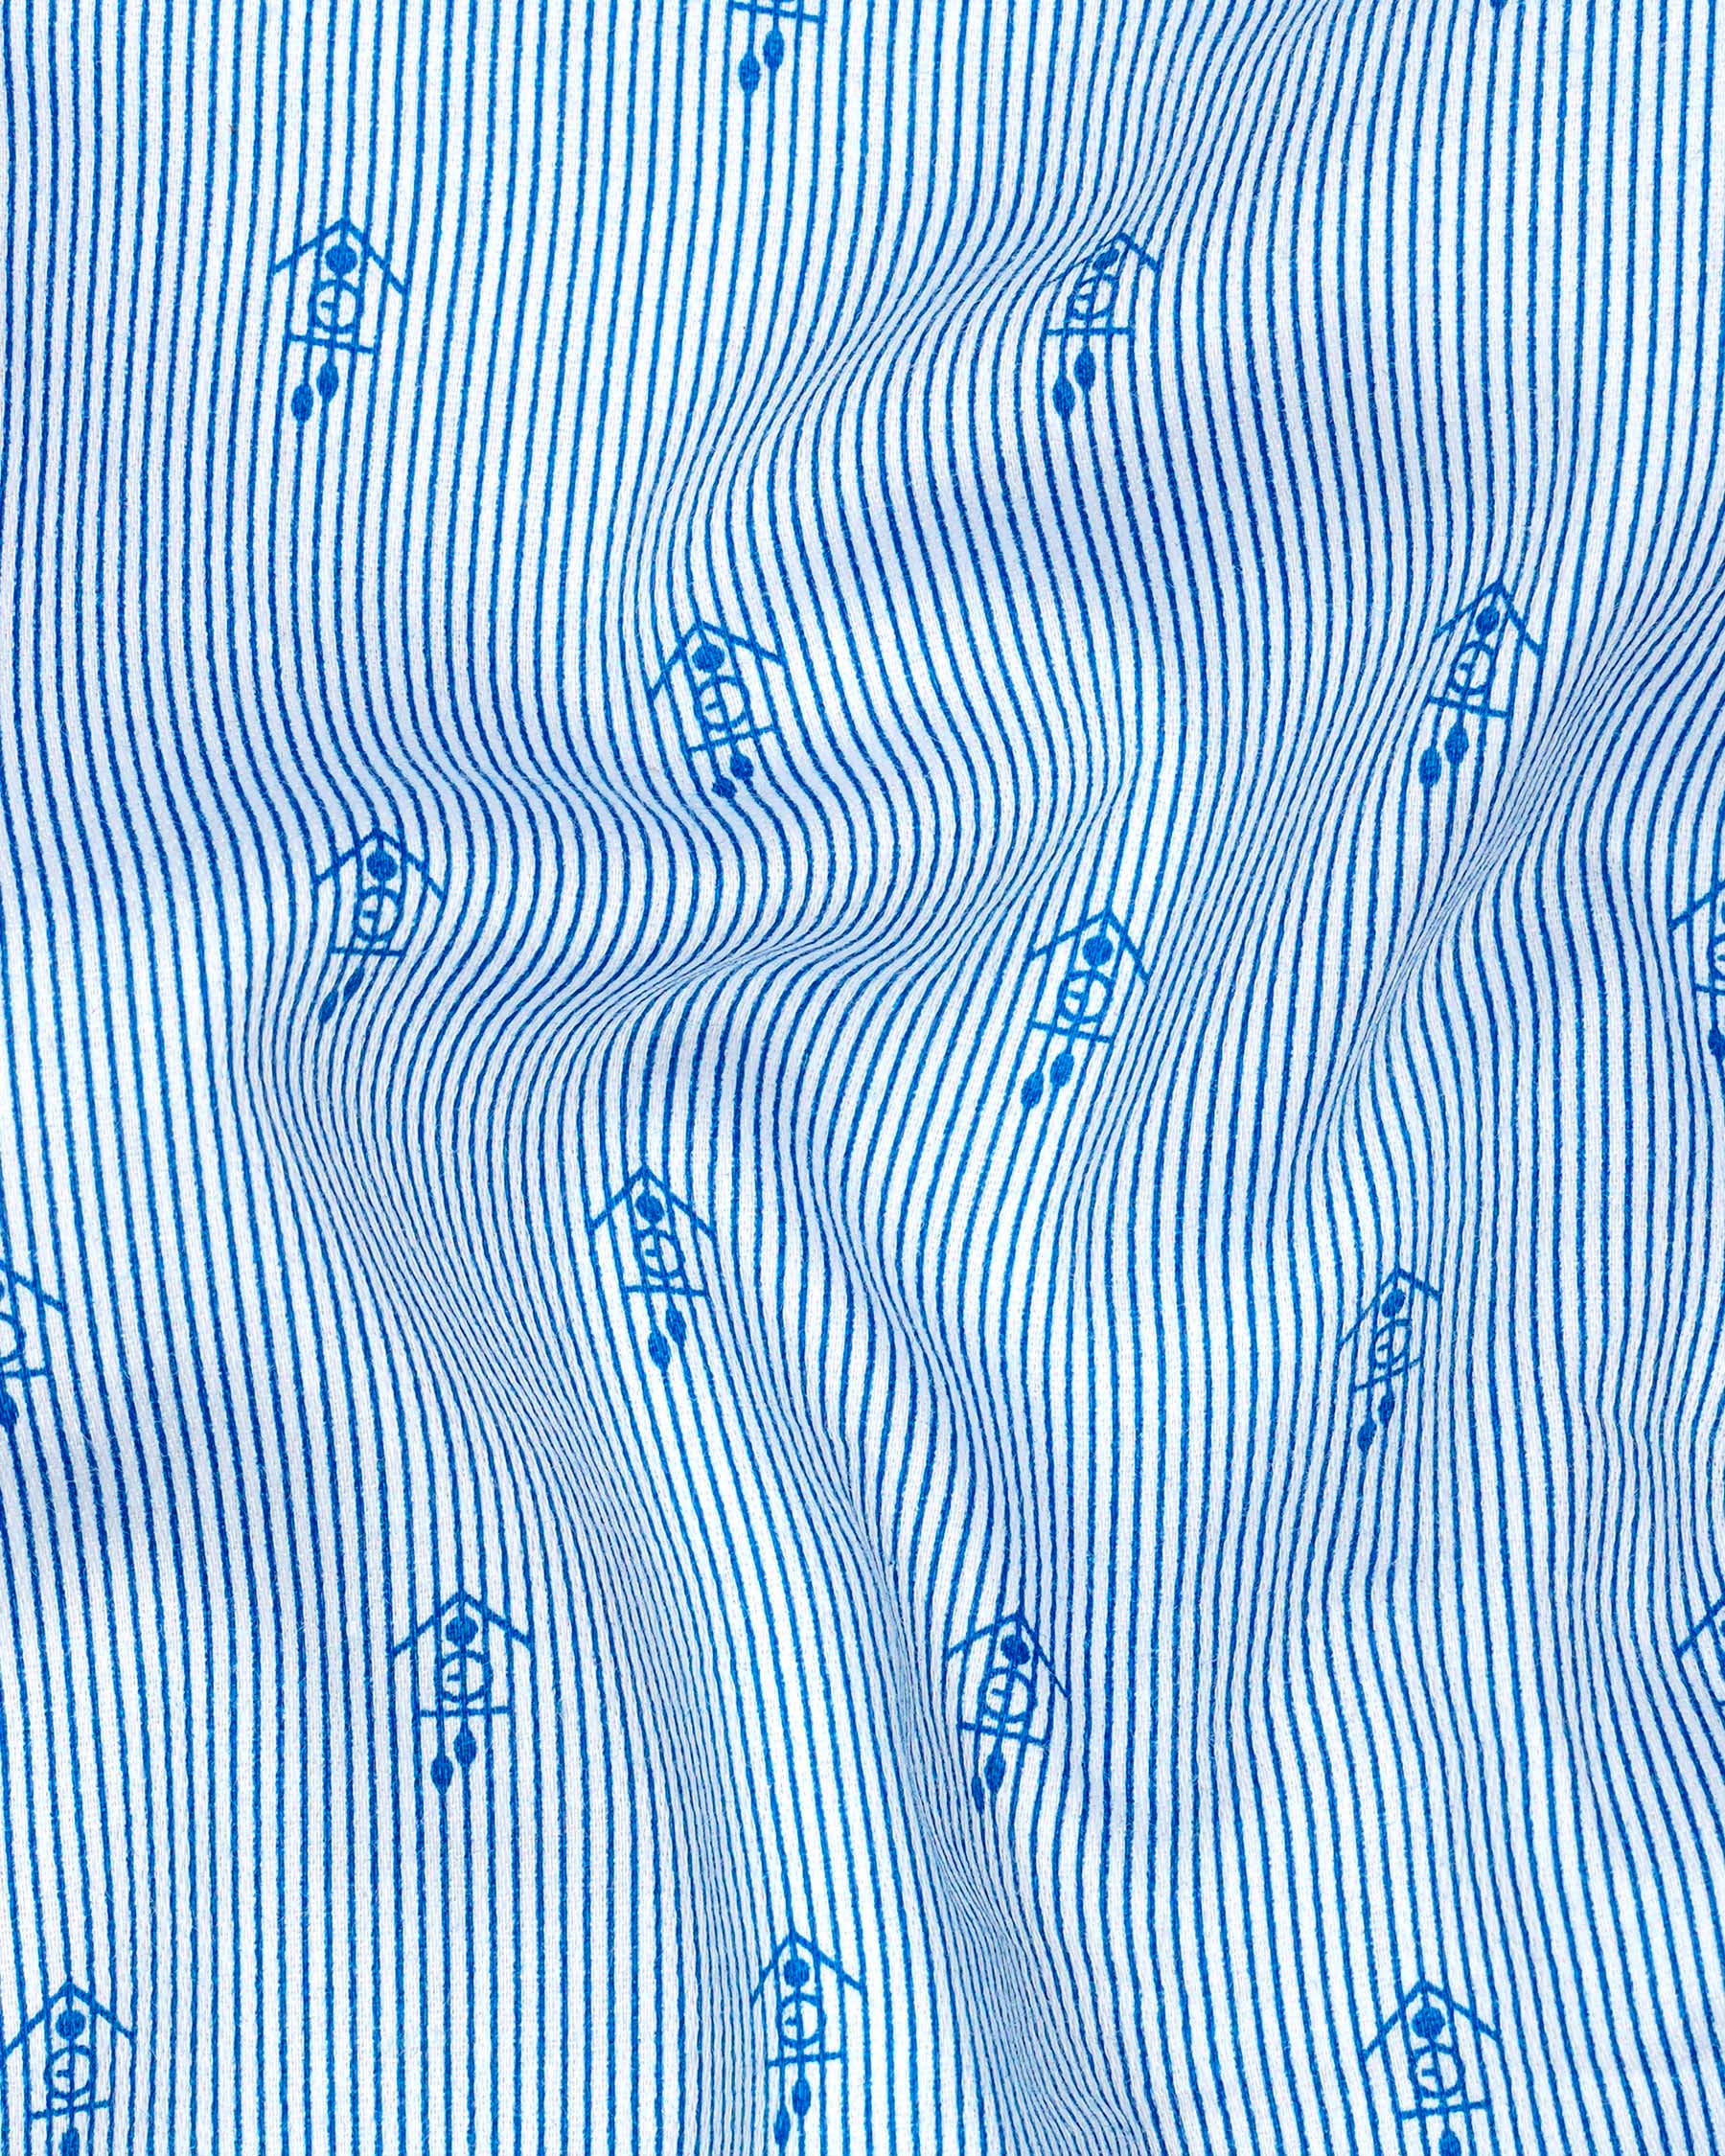 Curious Blue Striped and Anchor Printed Super Soft Premium Cotton Shirt 7622-BLE-38,7622-BLE-38,7622-BLE-39,7622-BLE-39,7622-BLE-40,7622-BLE-40,7622-BLE-42,7622-BLE-42,7622-BLE-44,7622-BLE-44,7622-BLE-46,7622-BLE-46,7622-BLE-48,7622-BLE-48,7622-BLE-50,7622-BLE-50,7622-BLE-52,7622-BLE-52